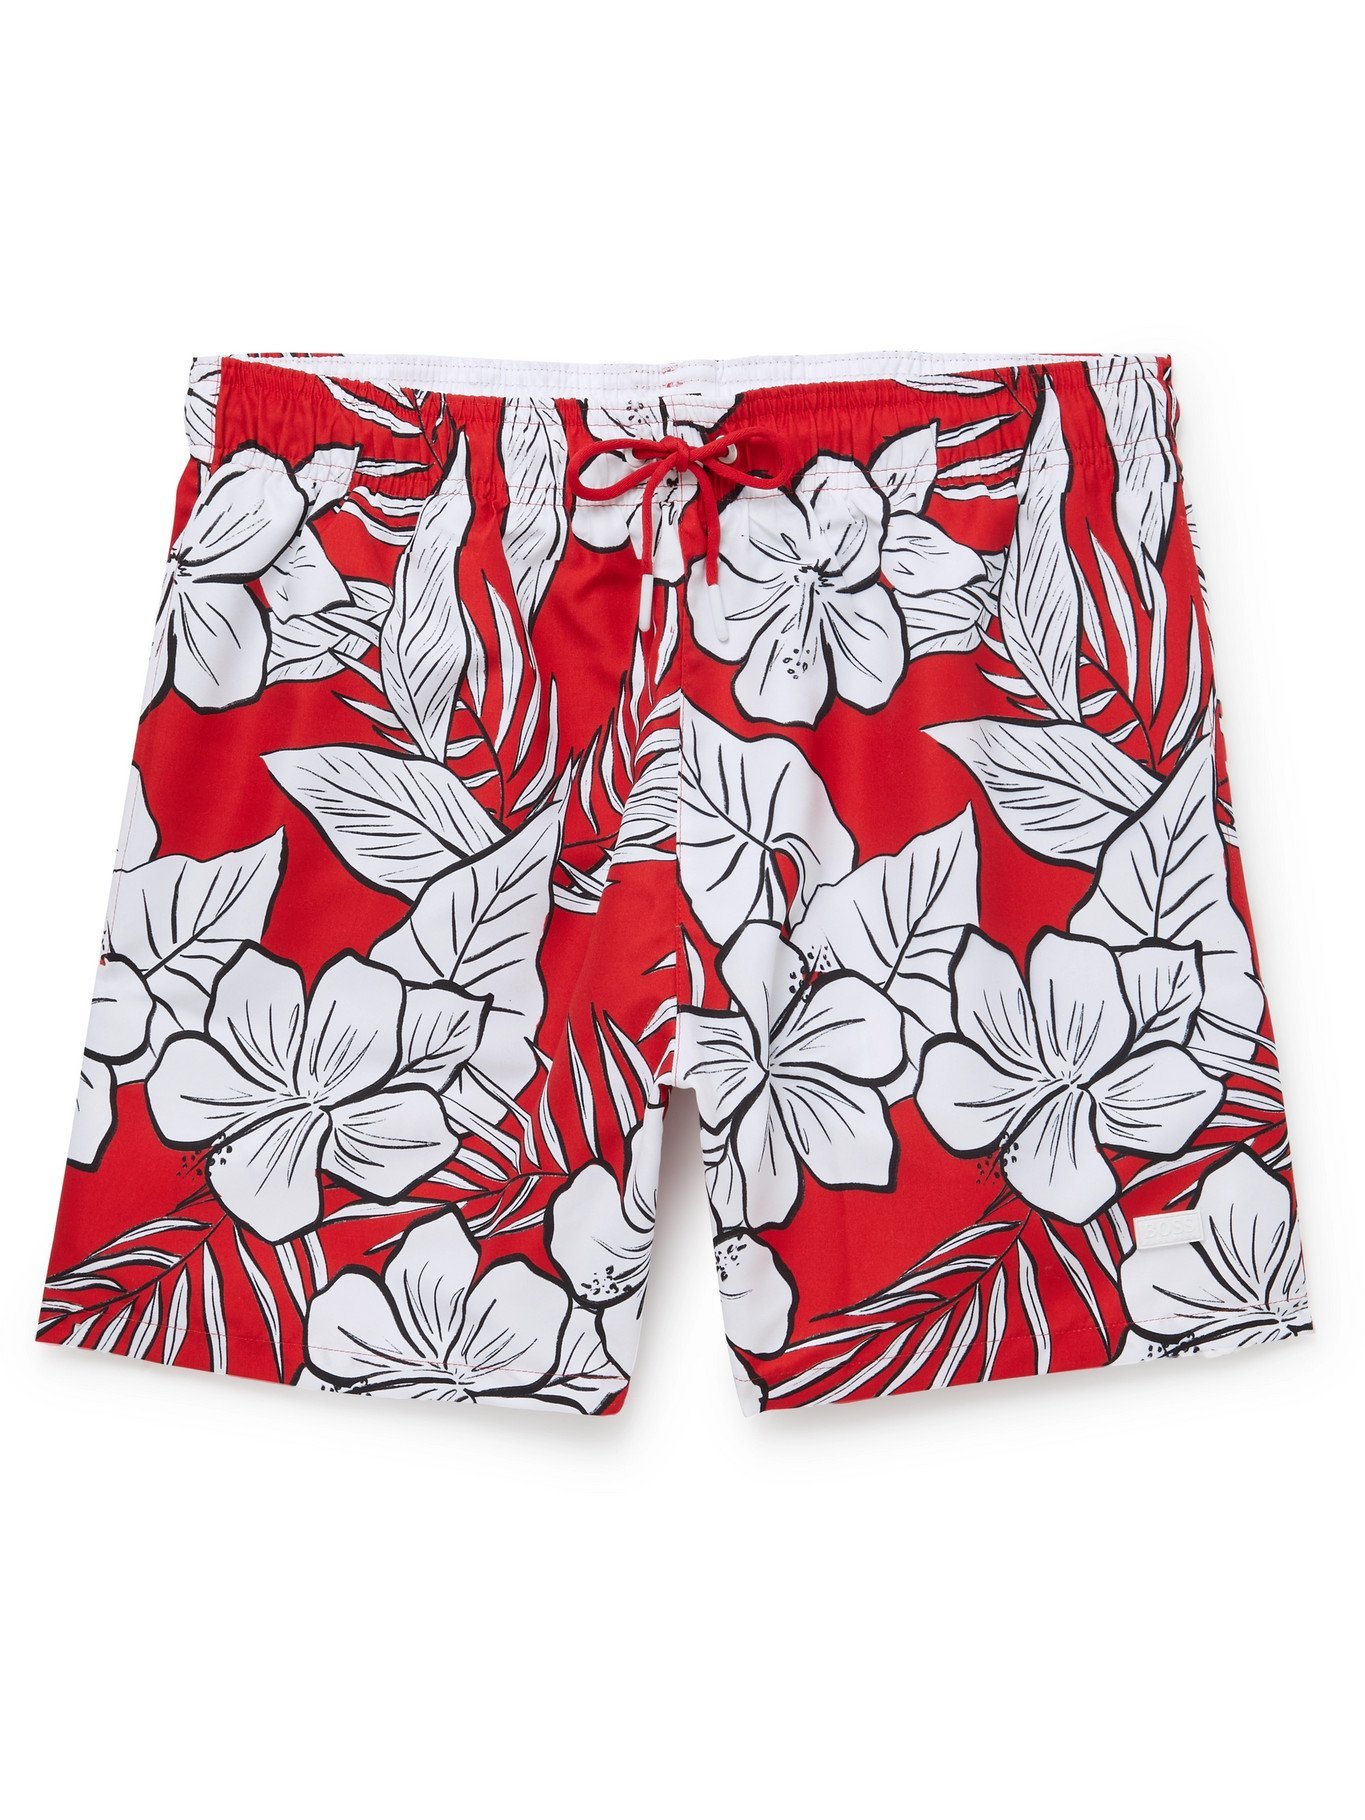 red boss swim shorts